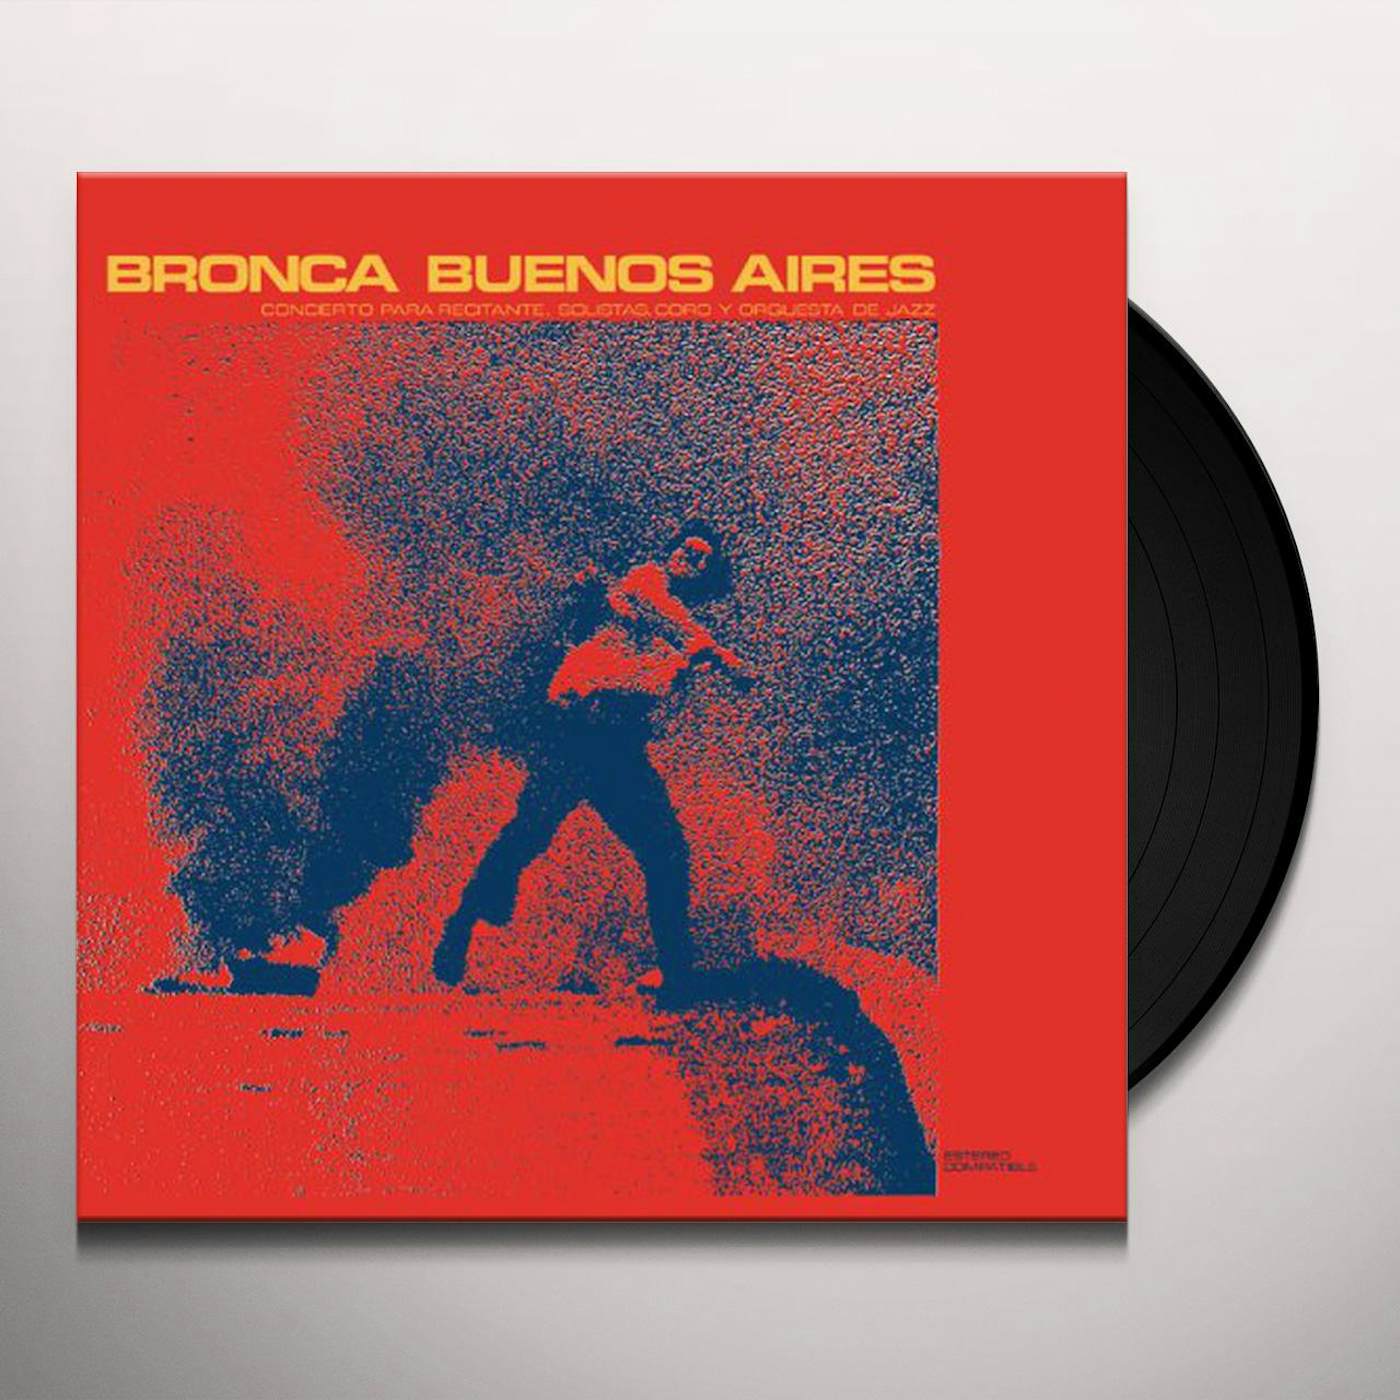 Jorge López Ruiz Bronca Buenos Aires Vinyl Record